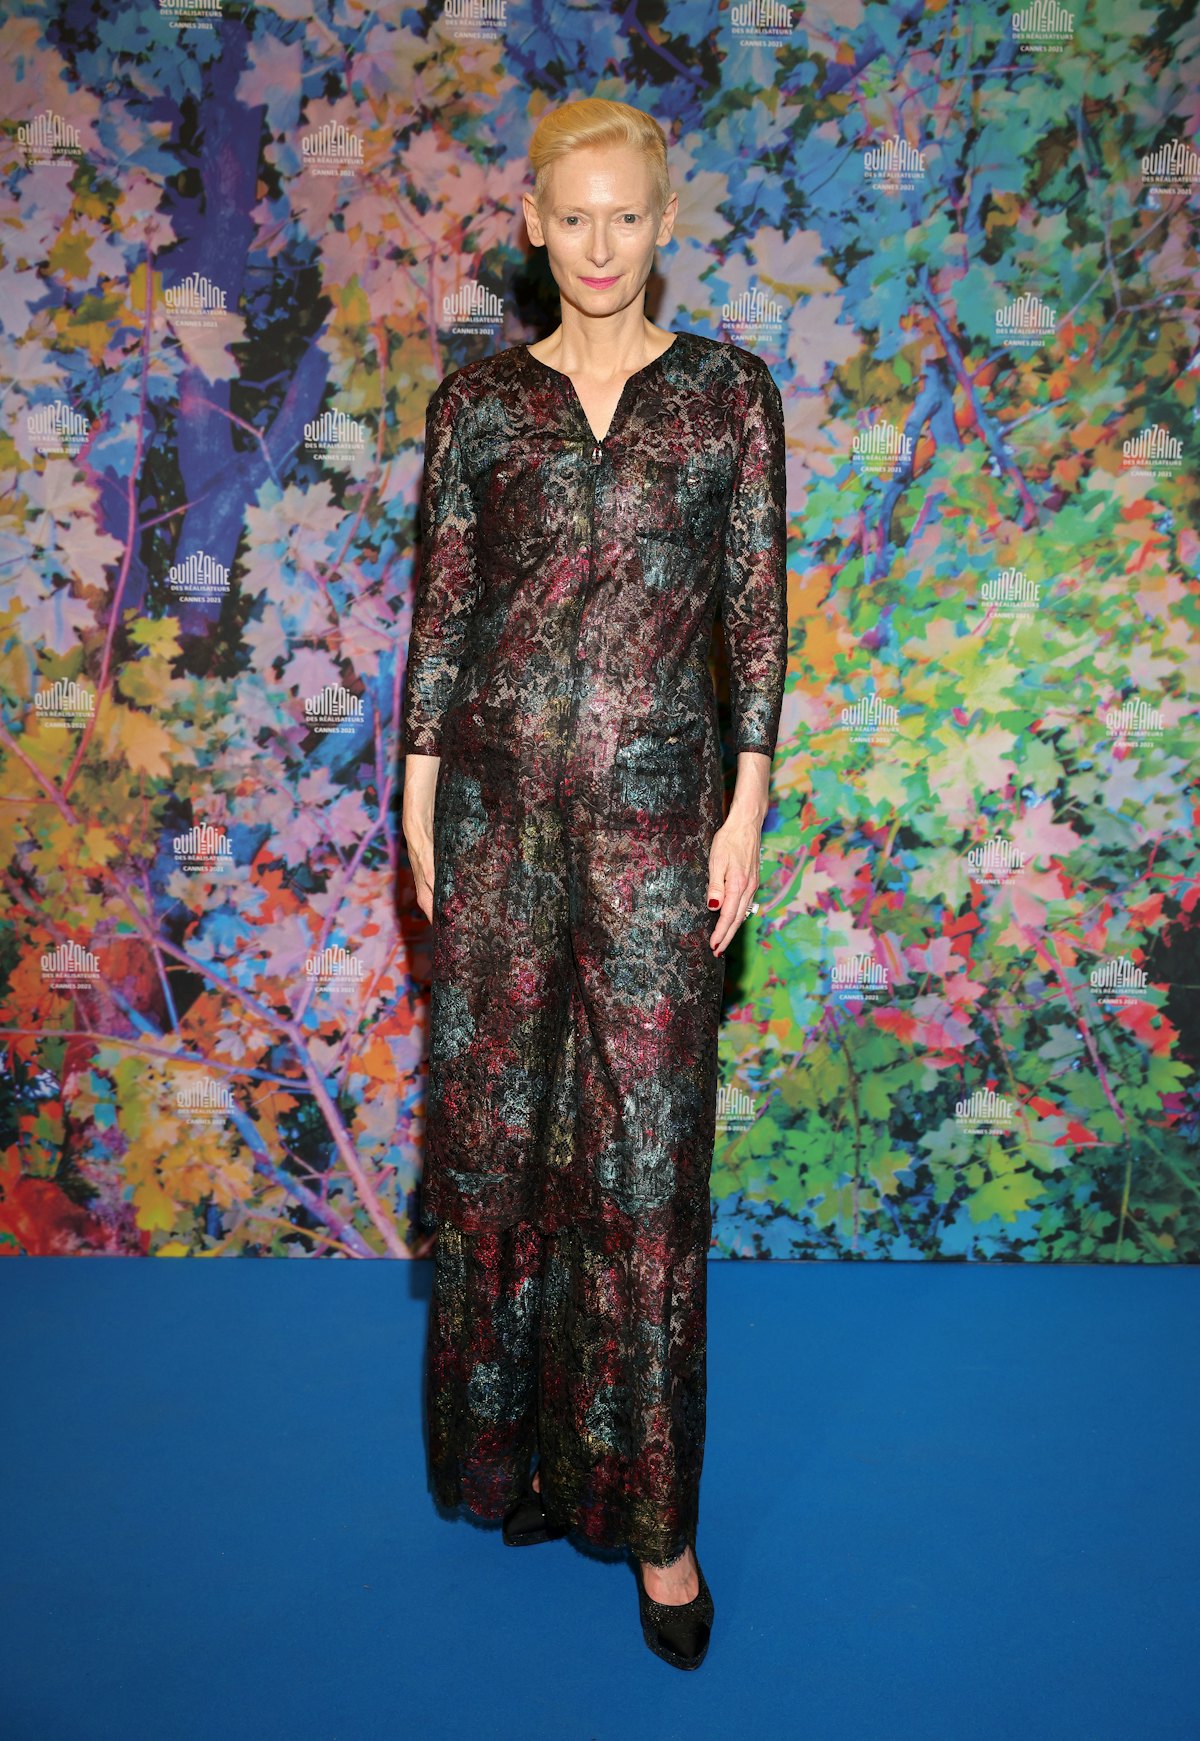 Tilda Swinton wearing shiny suit against multicolor floral background